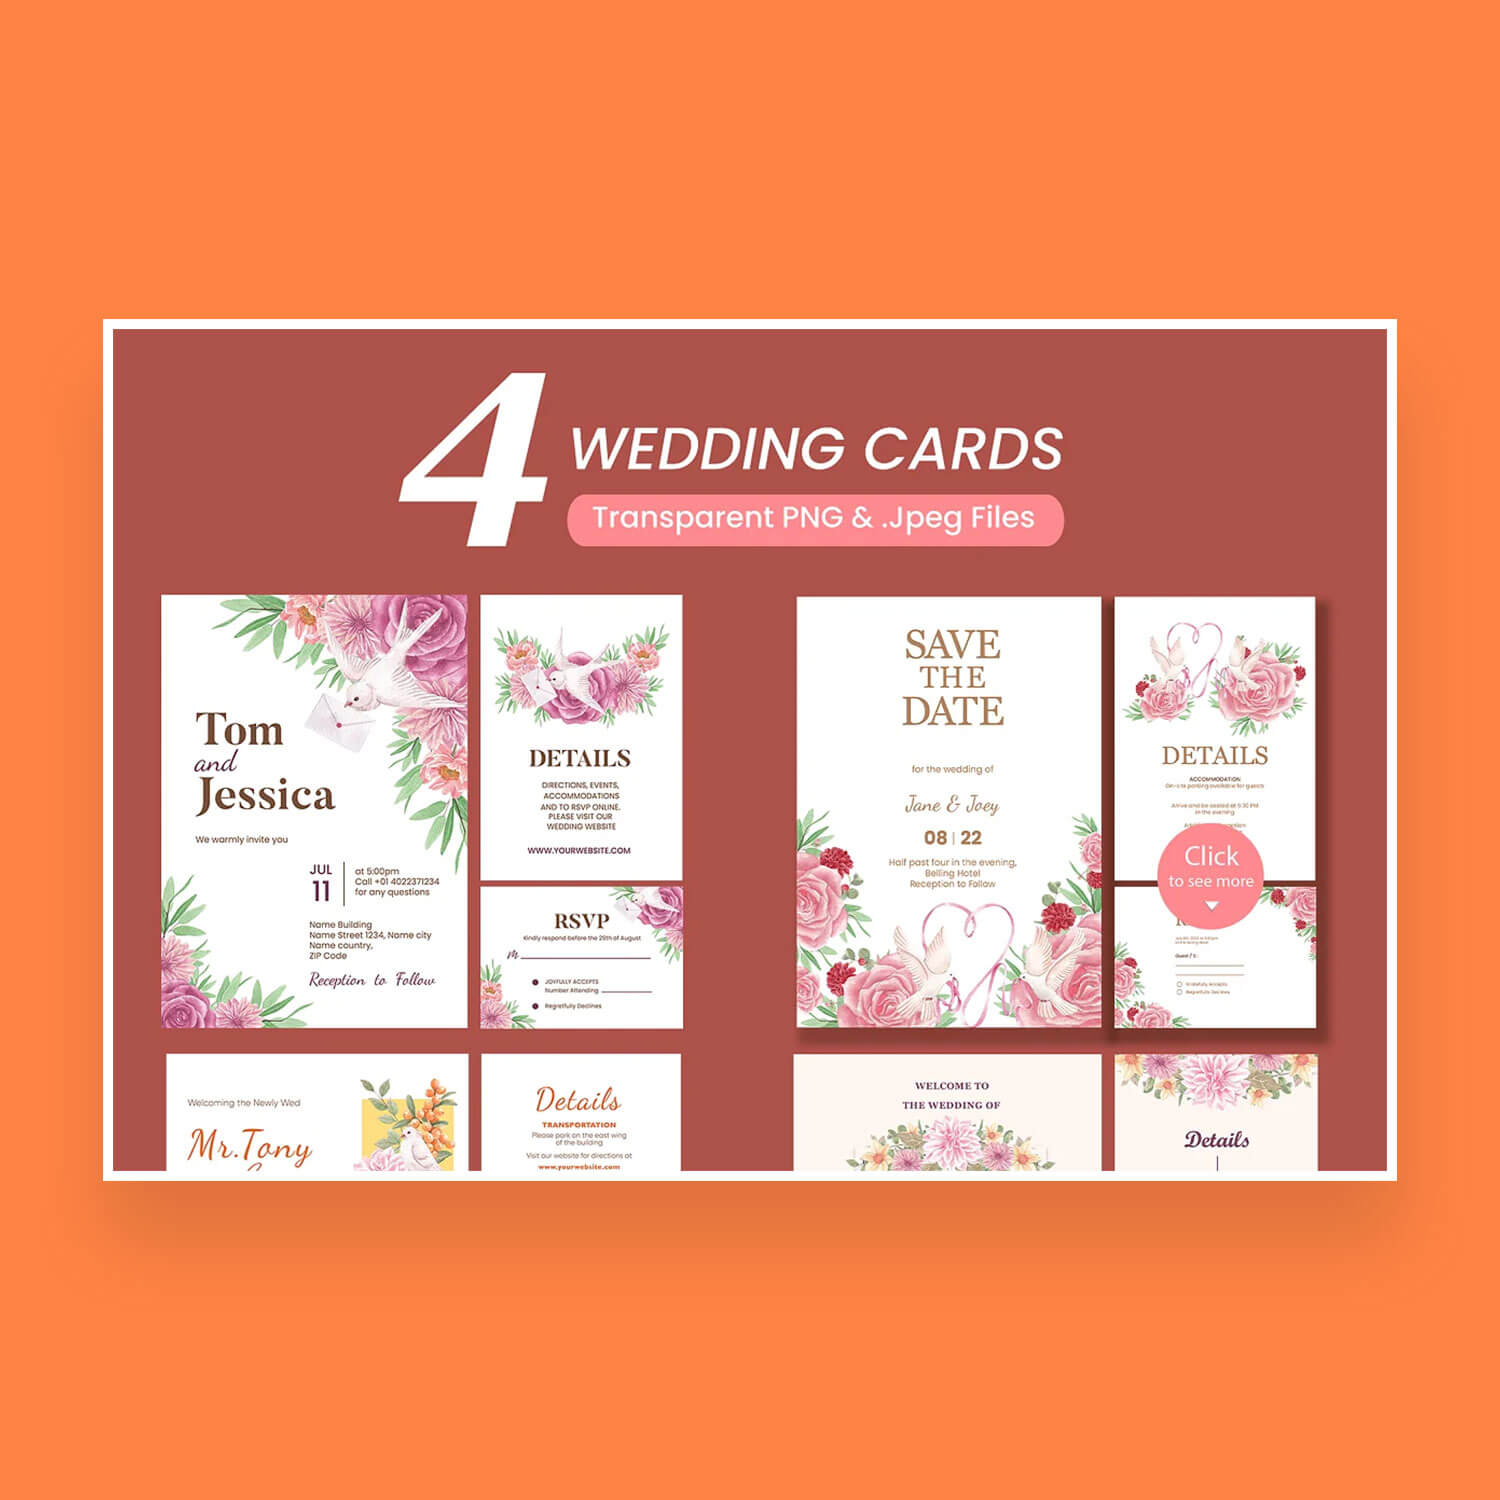 4 Wedding Cards.